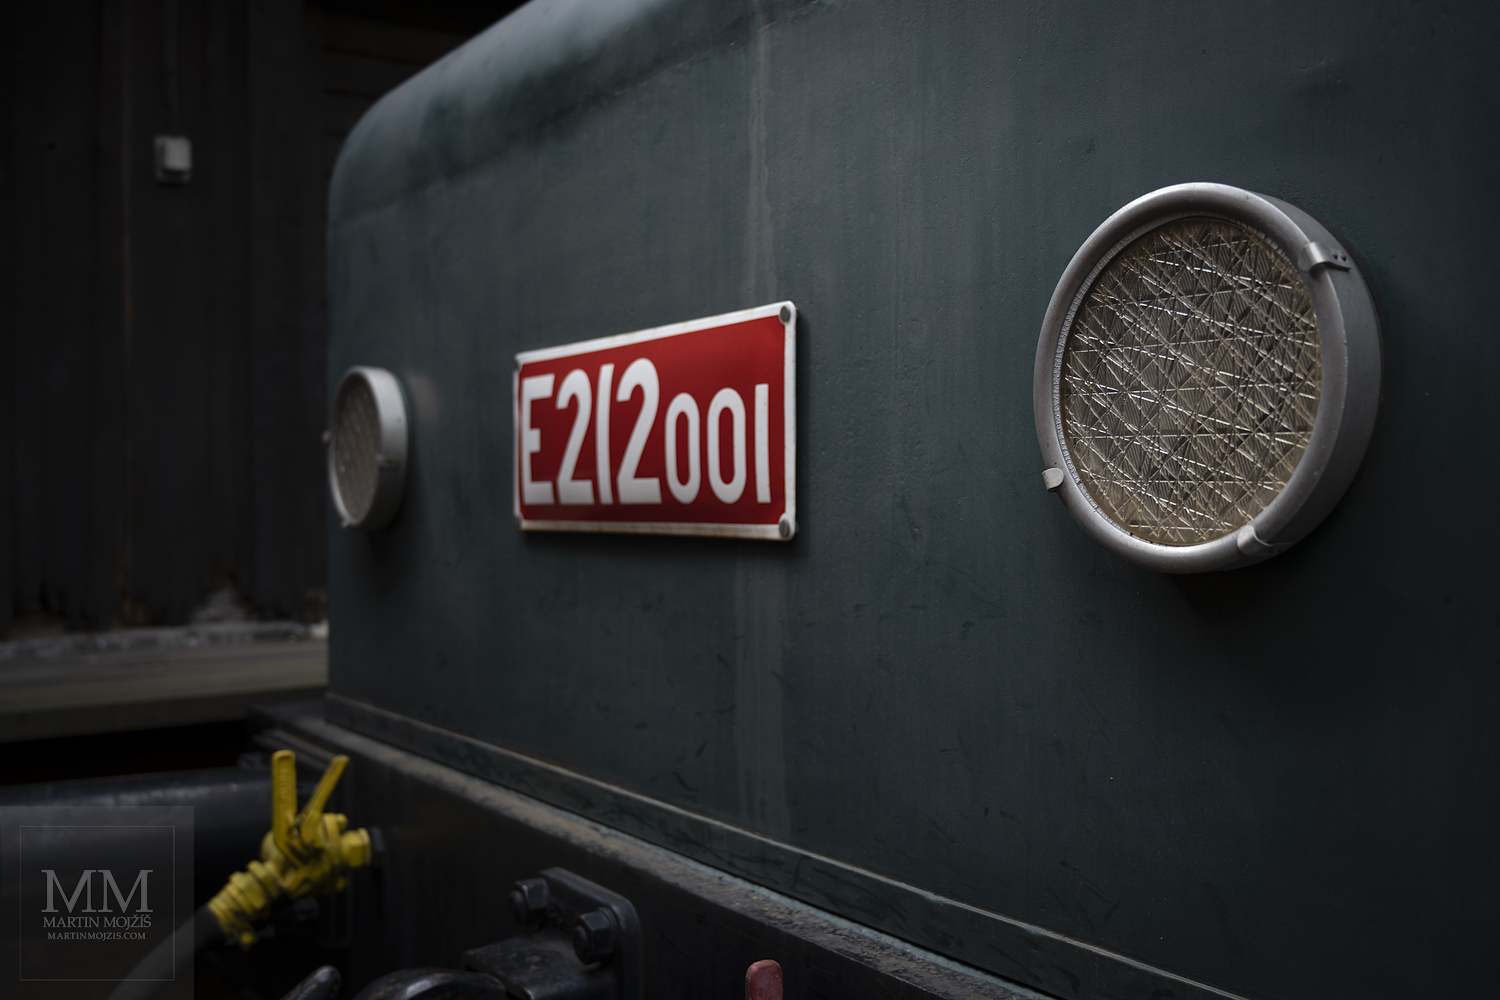 Reflektory lokomotivy E 212.001.